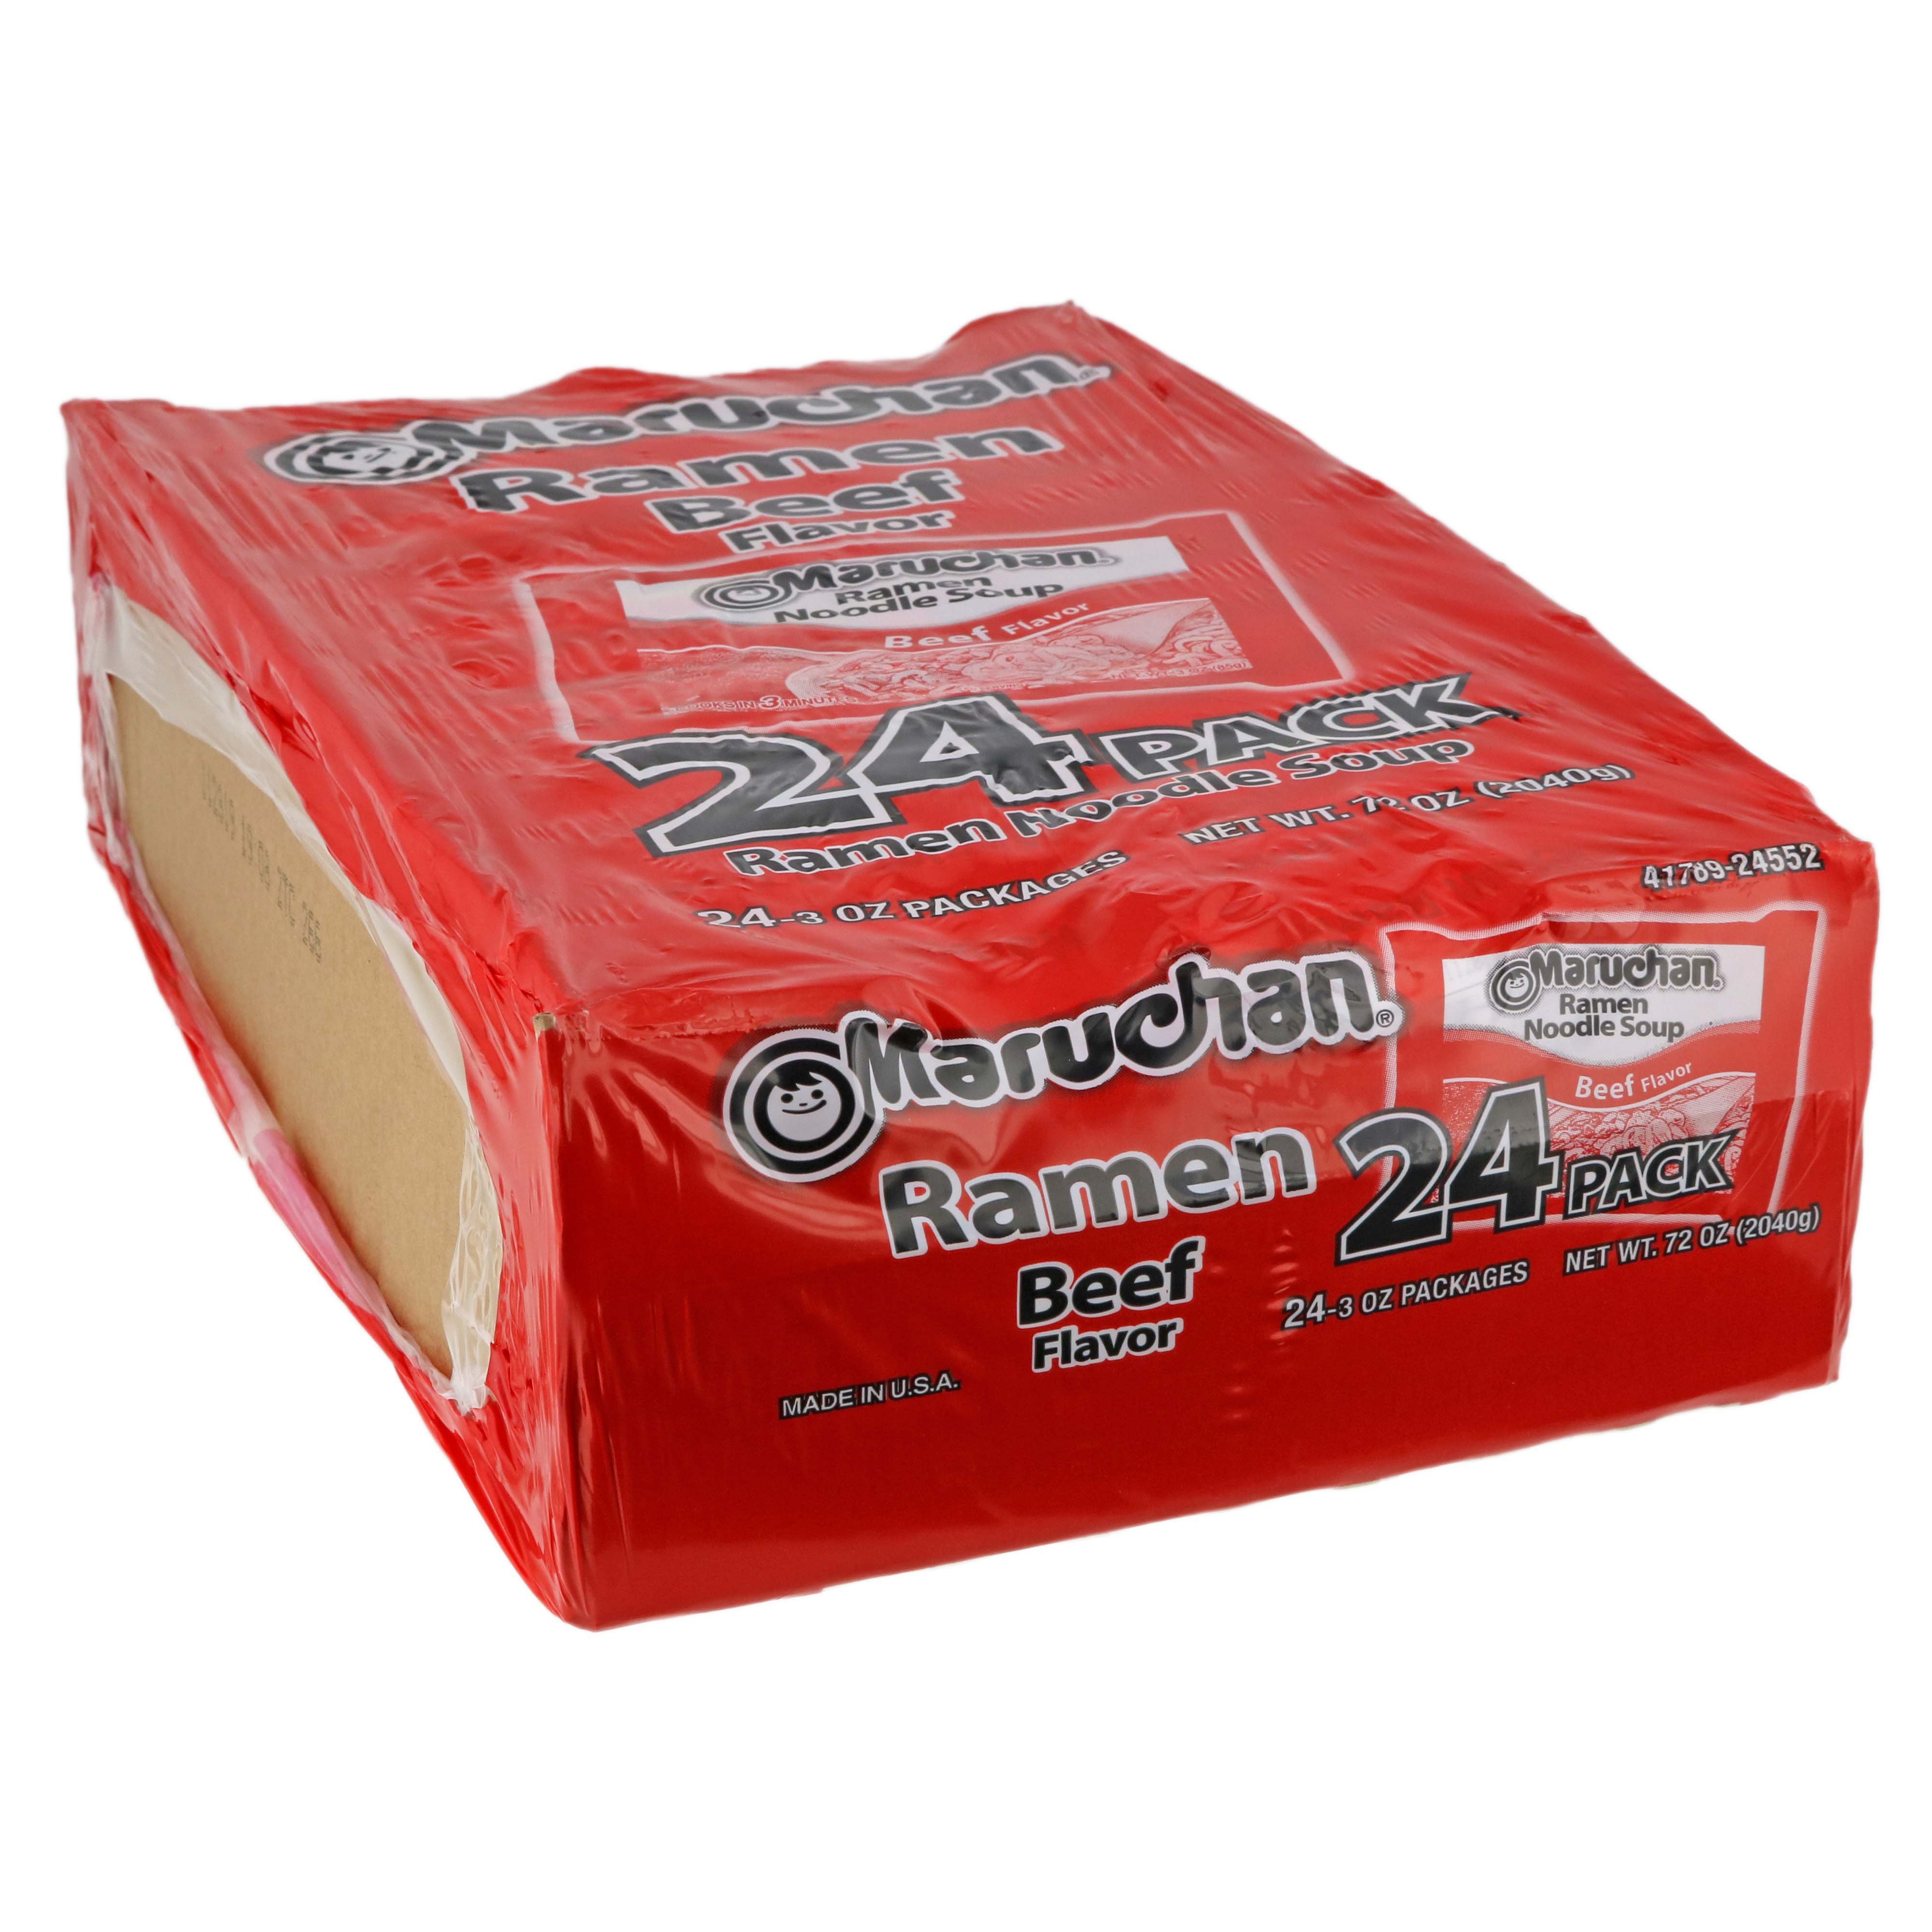 Maruchan Ramen, Pork, 3-Ounce Packages (Pack of 24)